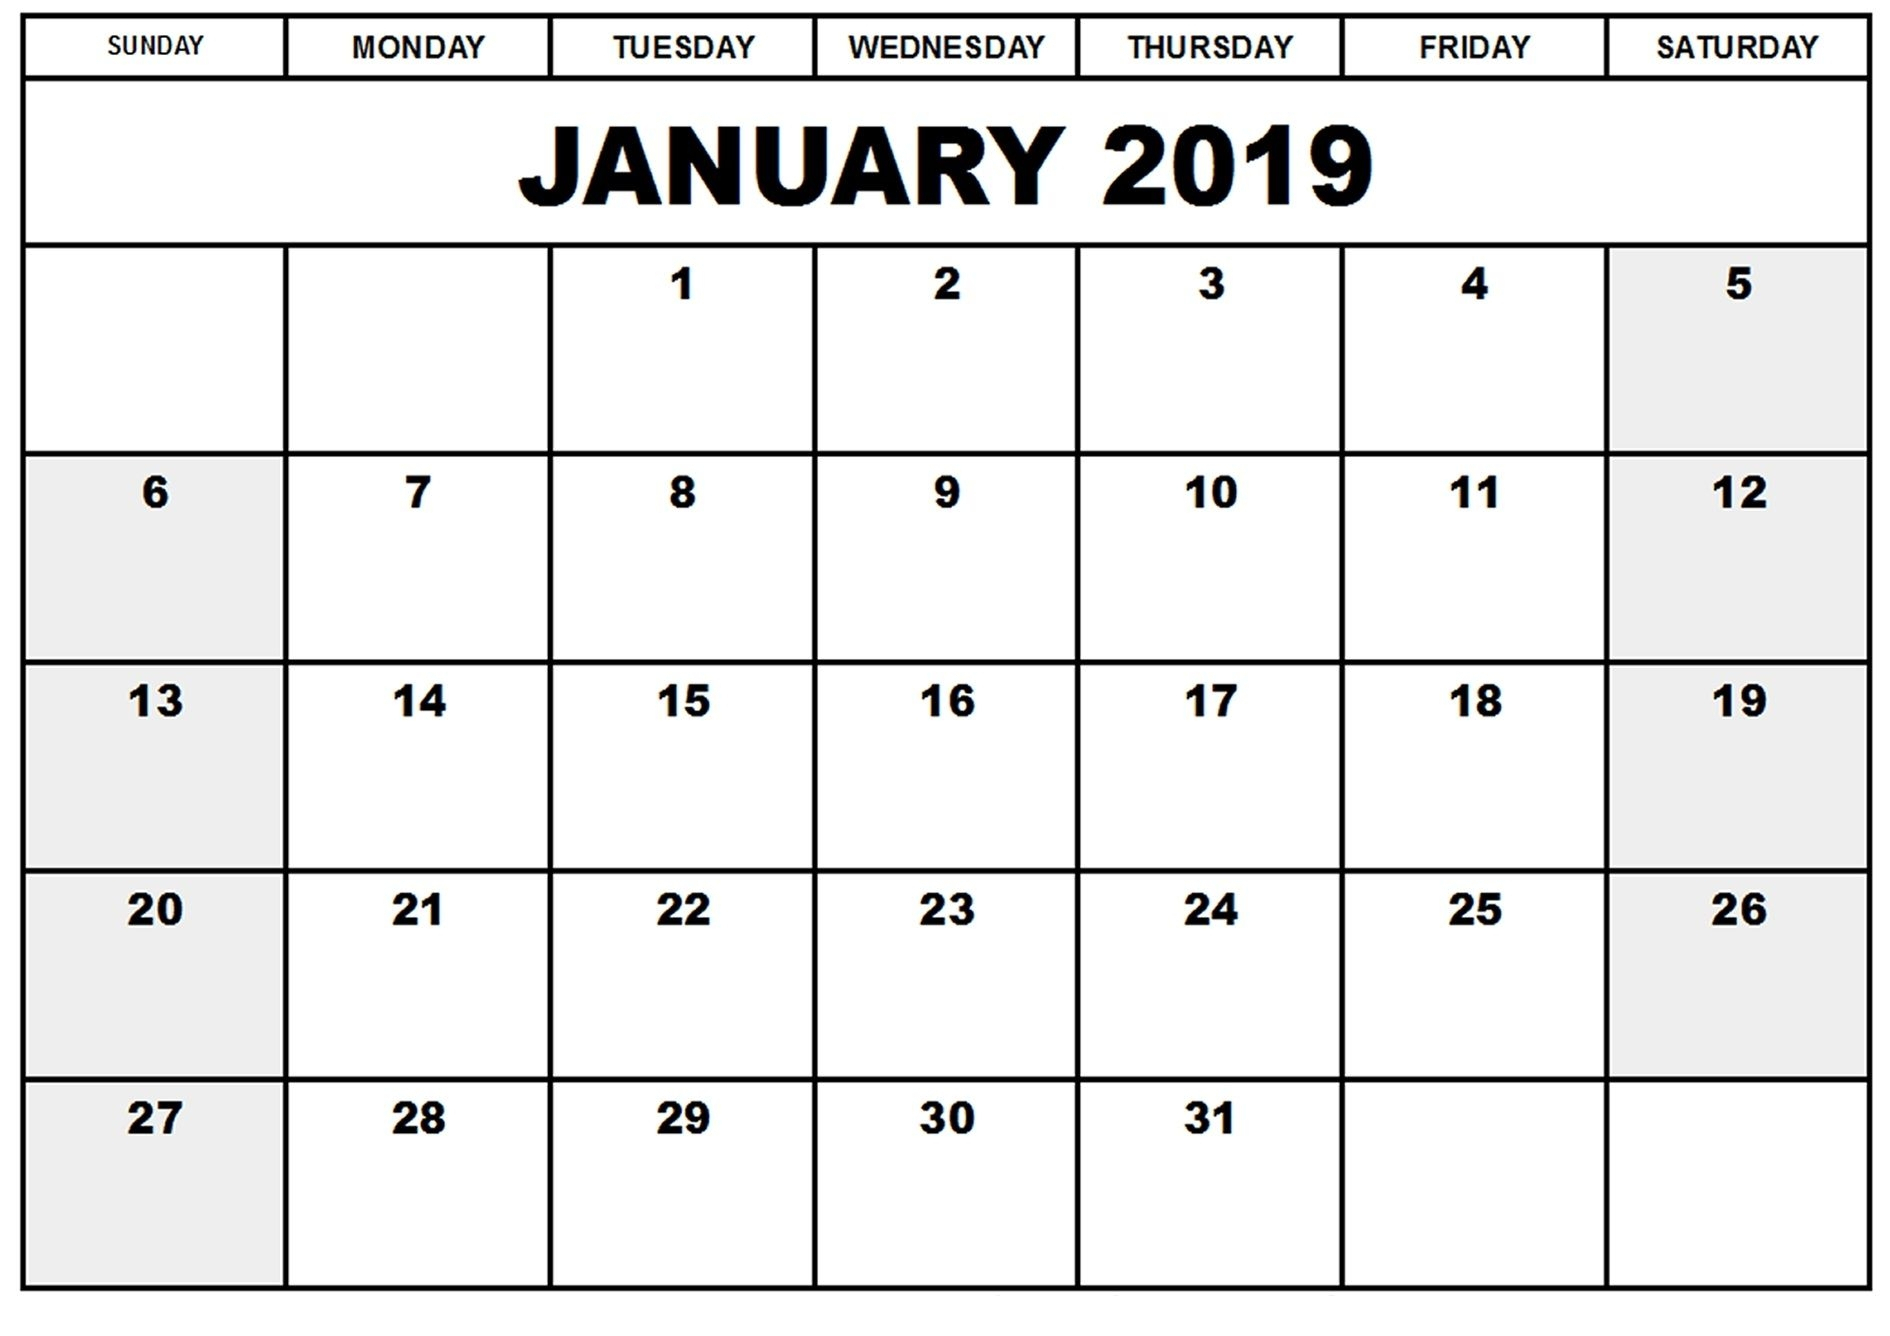 January Calendar 2019 Malayalam - Free Printable Calendar